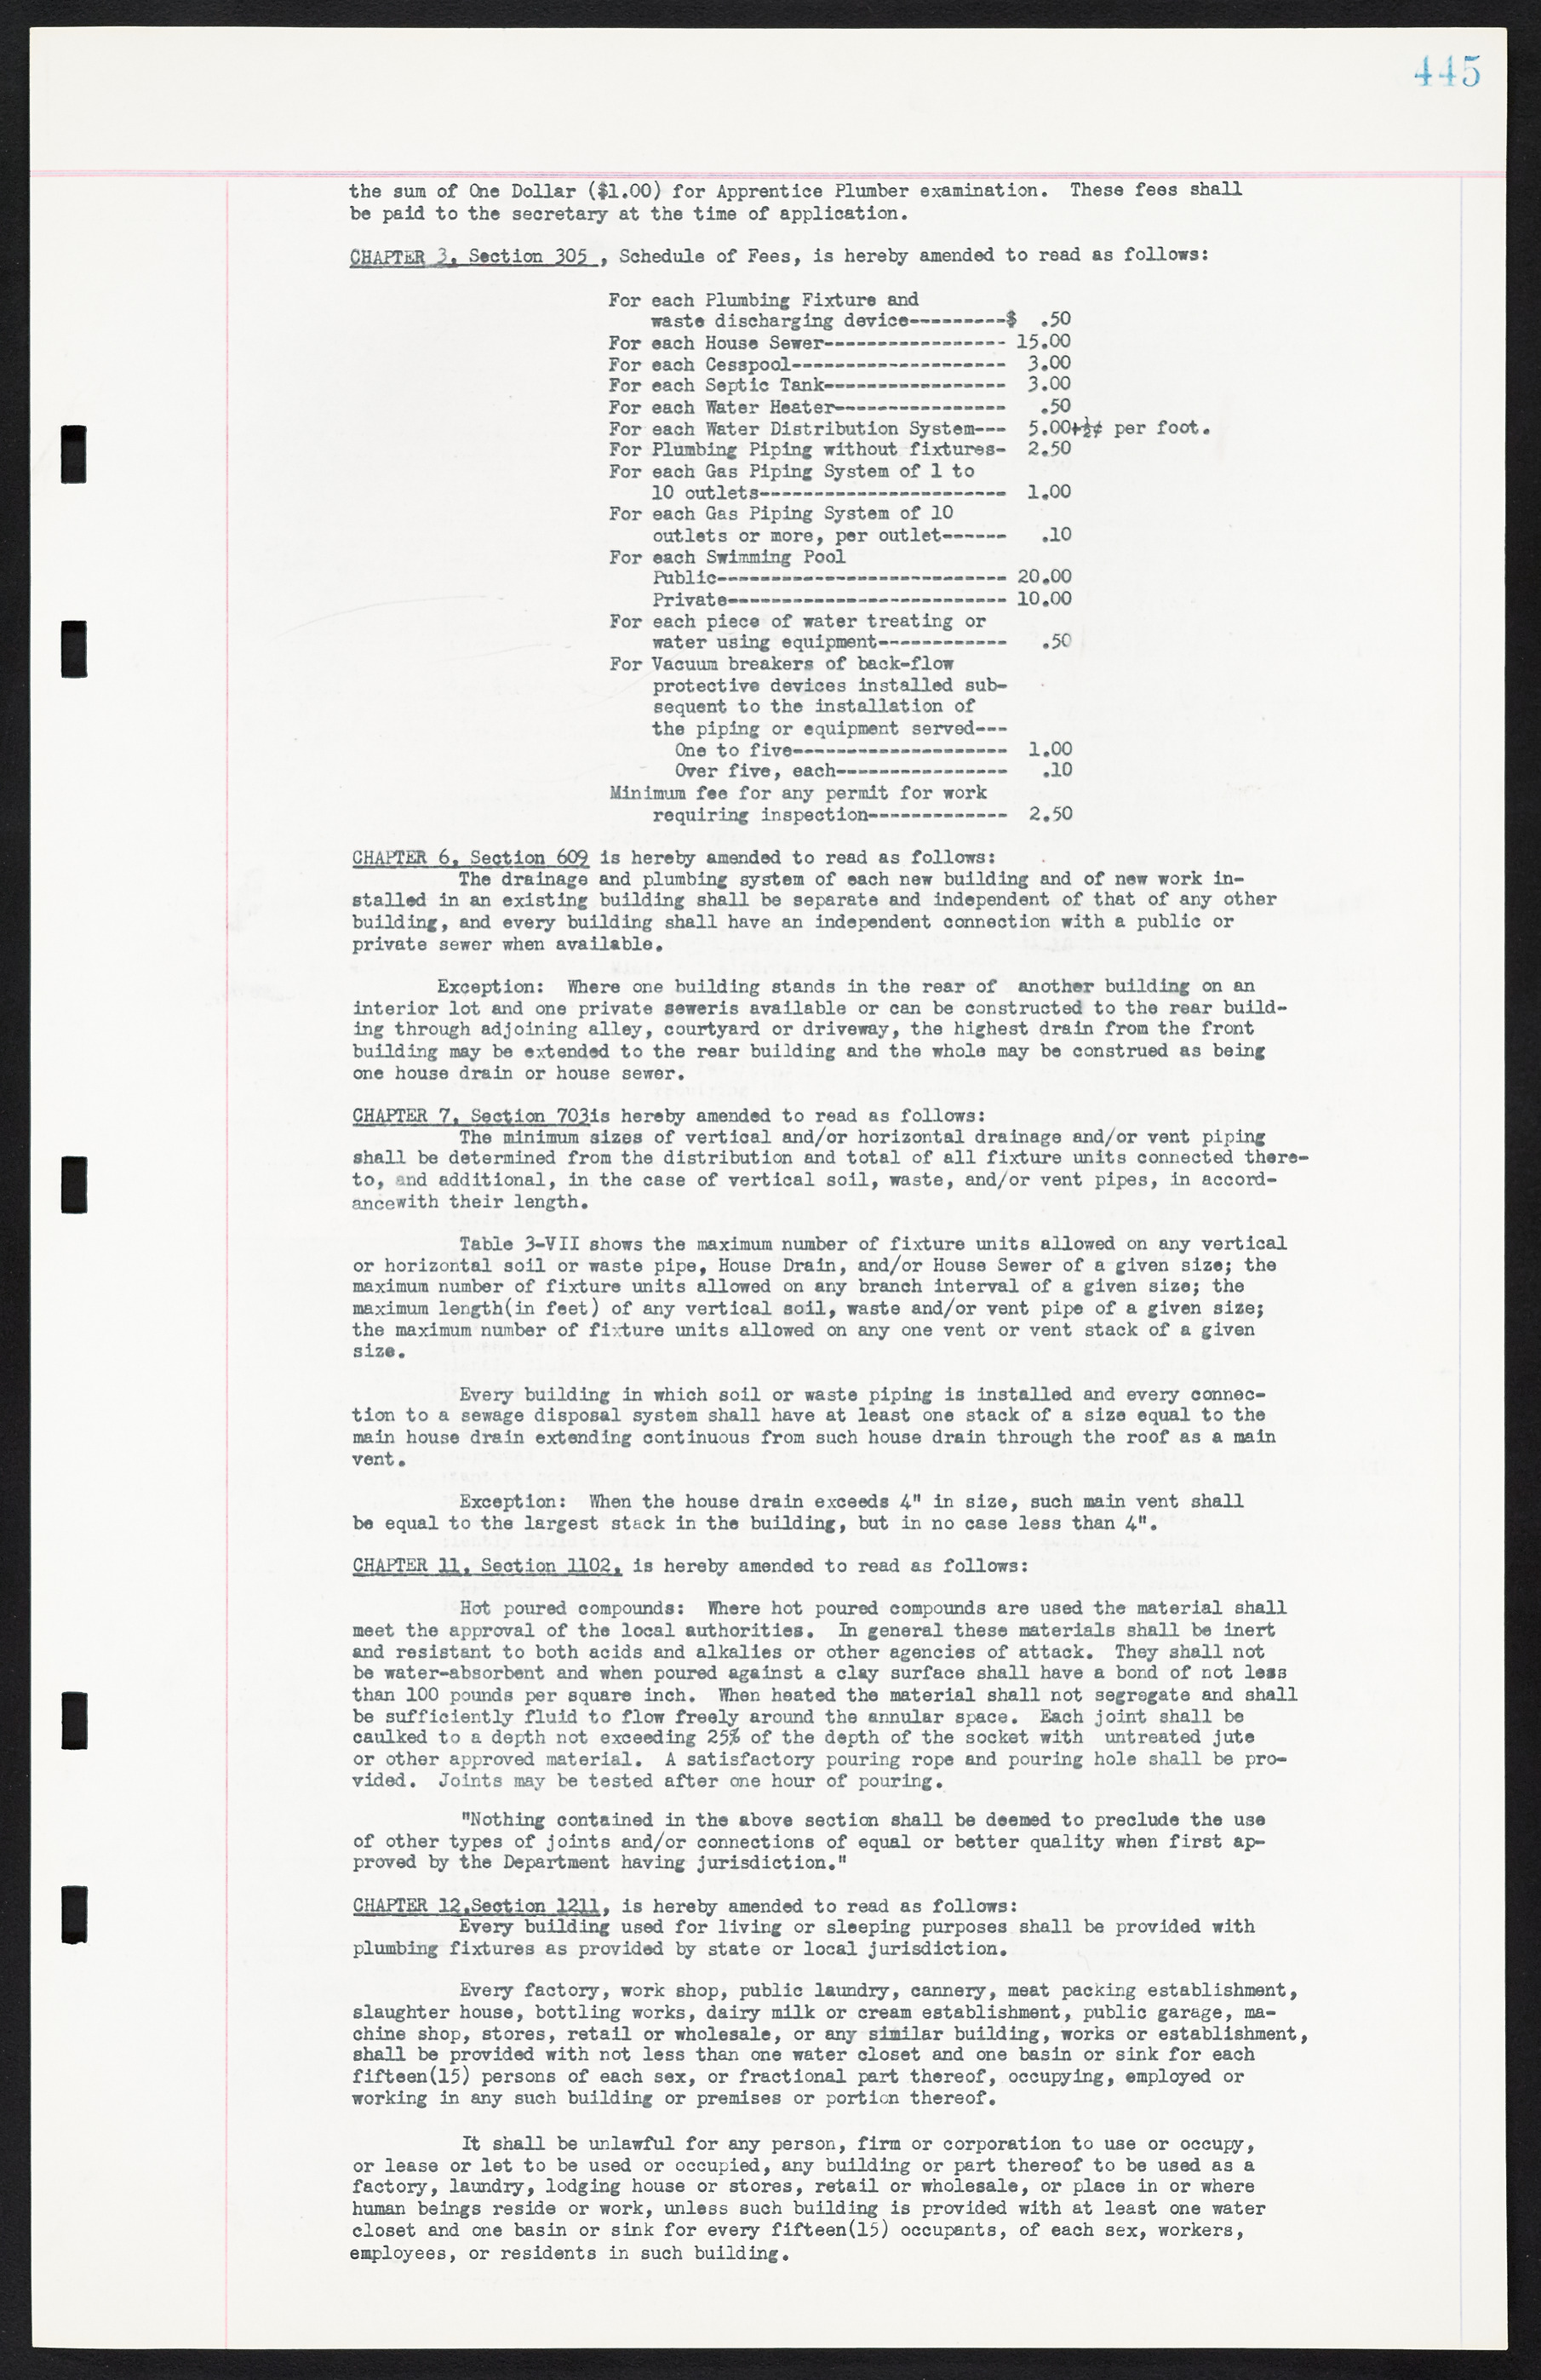 Las Vegas City Ordinances, March 31, 1933 to October 25, 1950, lvc000014-481